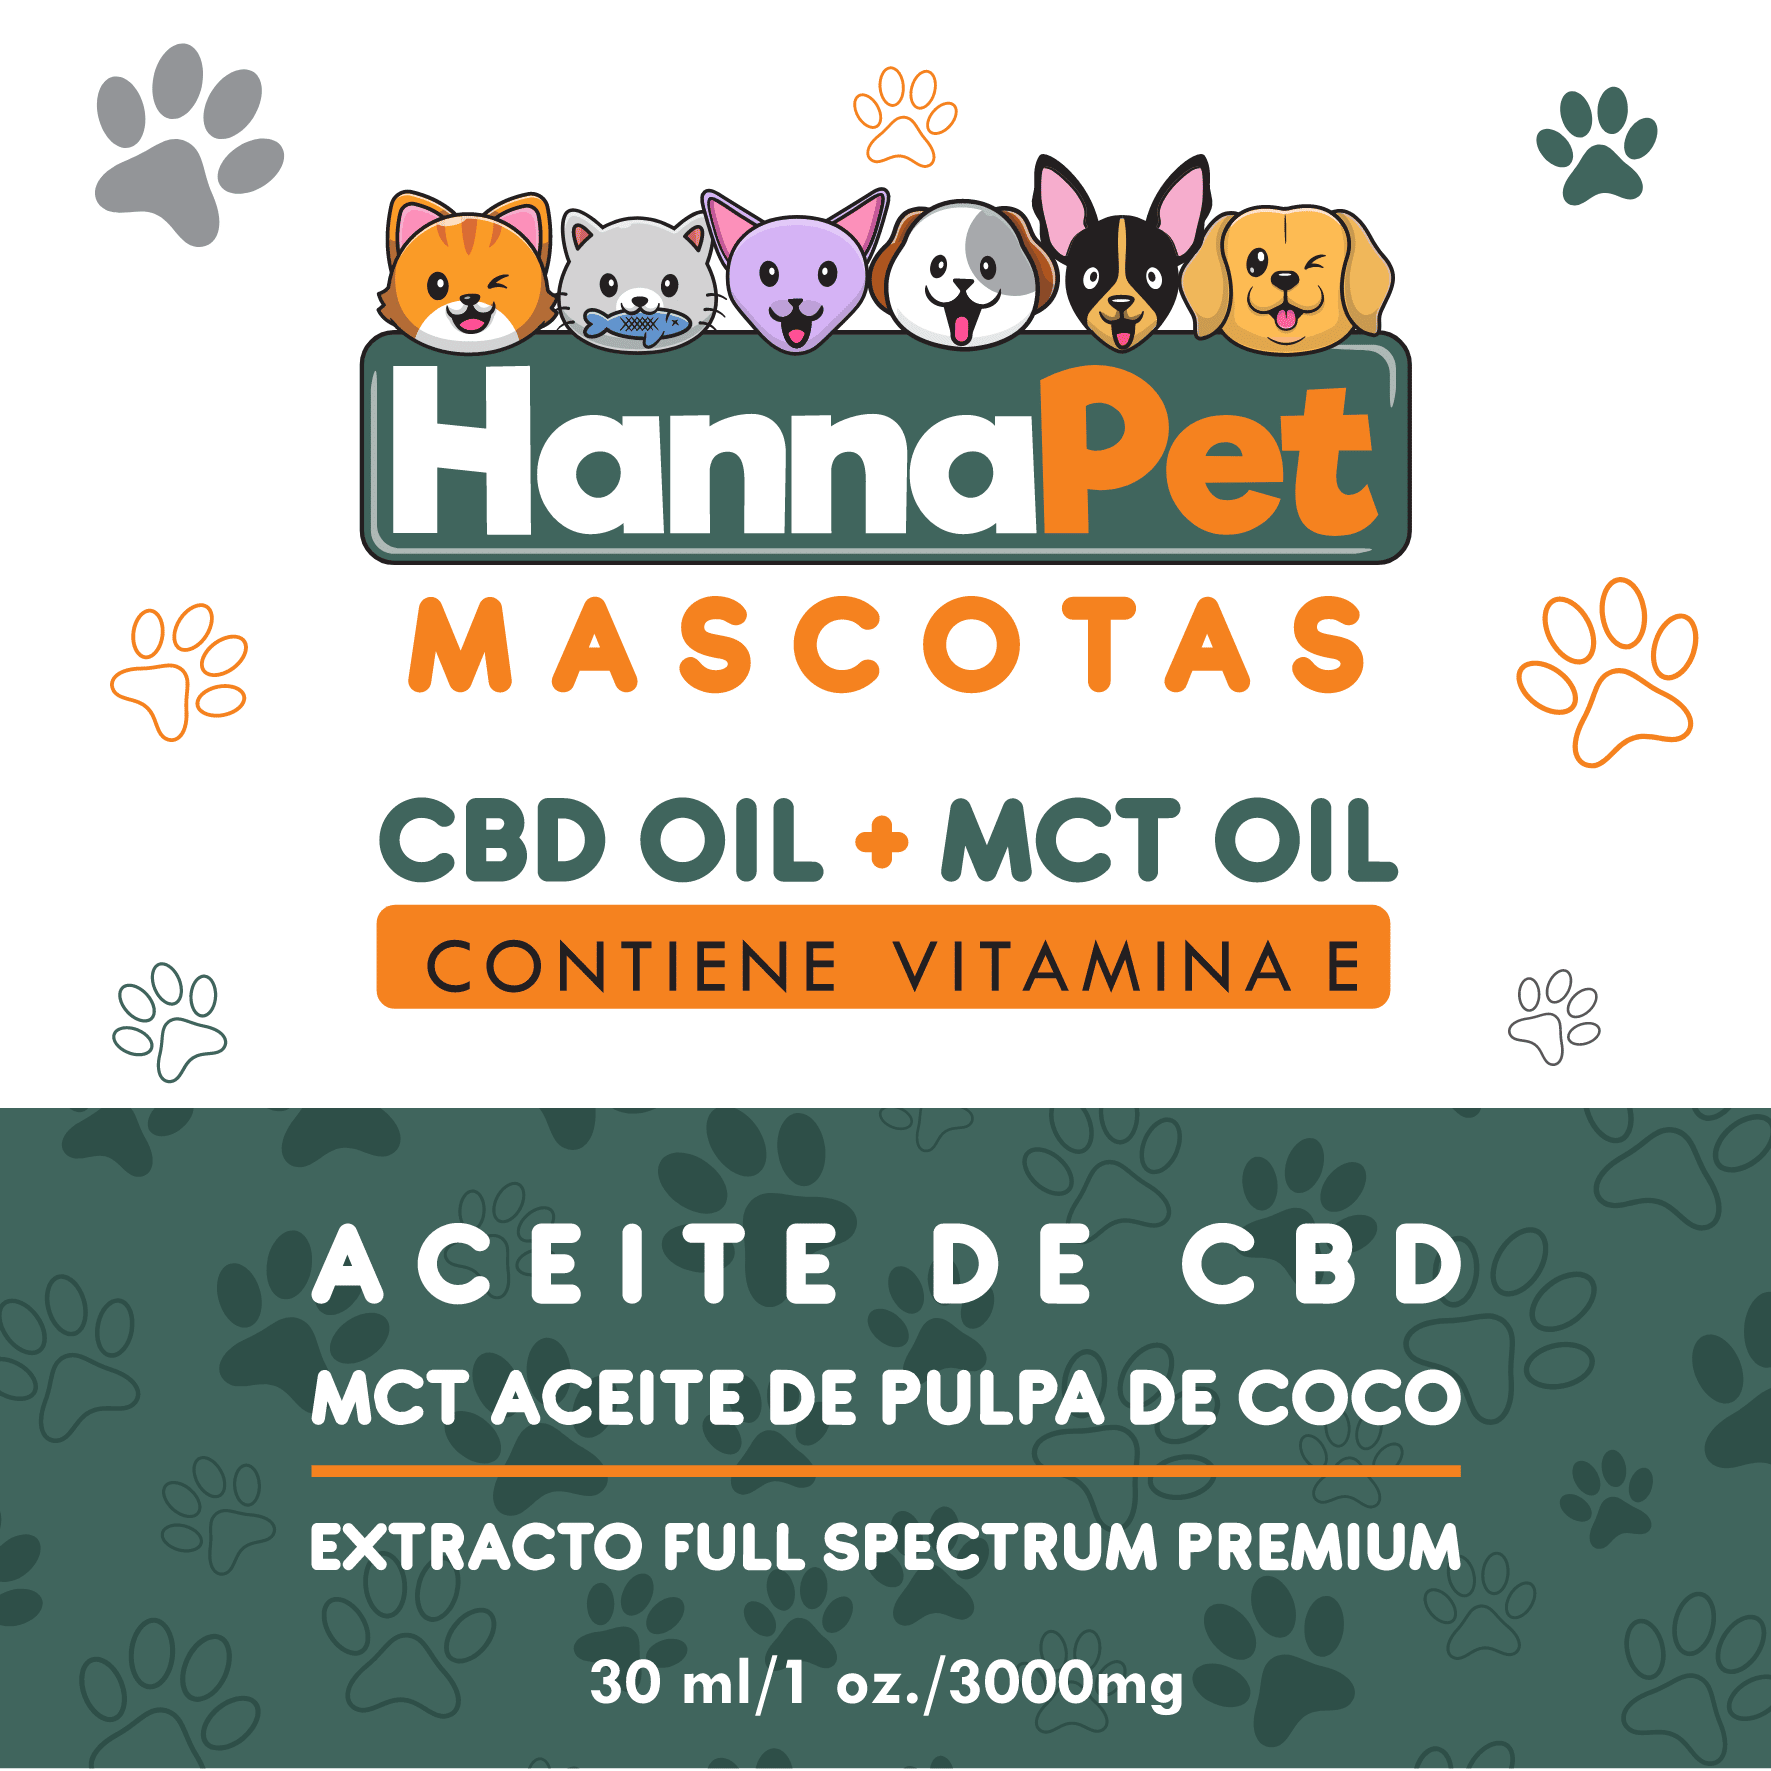 HannaPet Mascotas.pdf